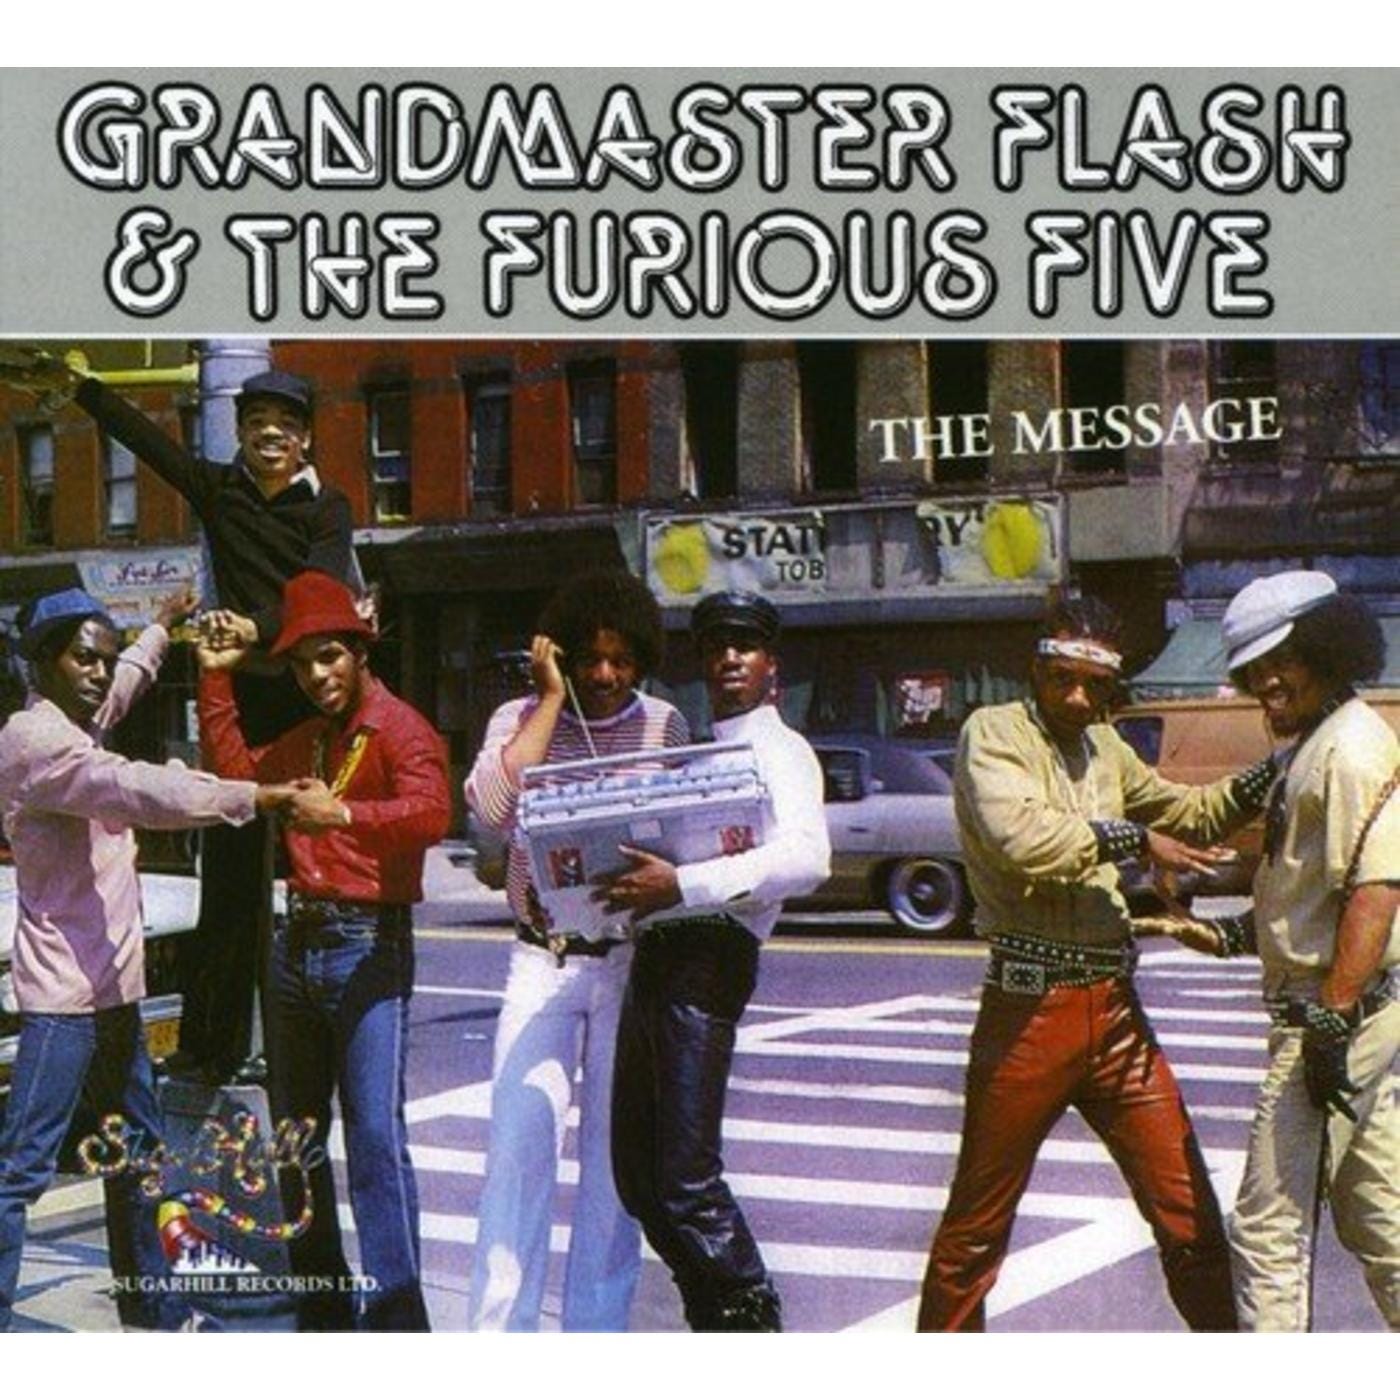 Grand Master Flash & The Furious Five Featuring: Melle Mel & Duke